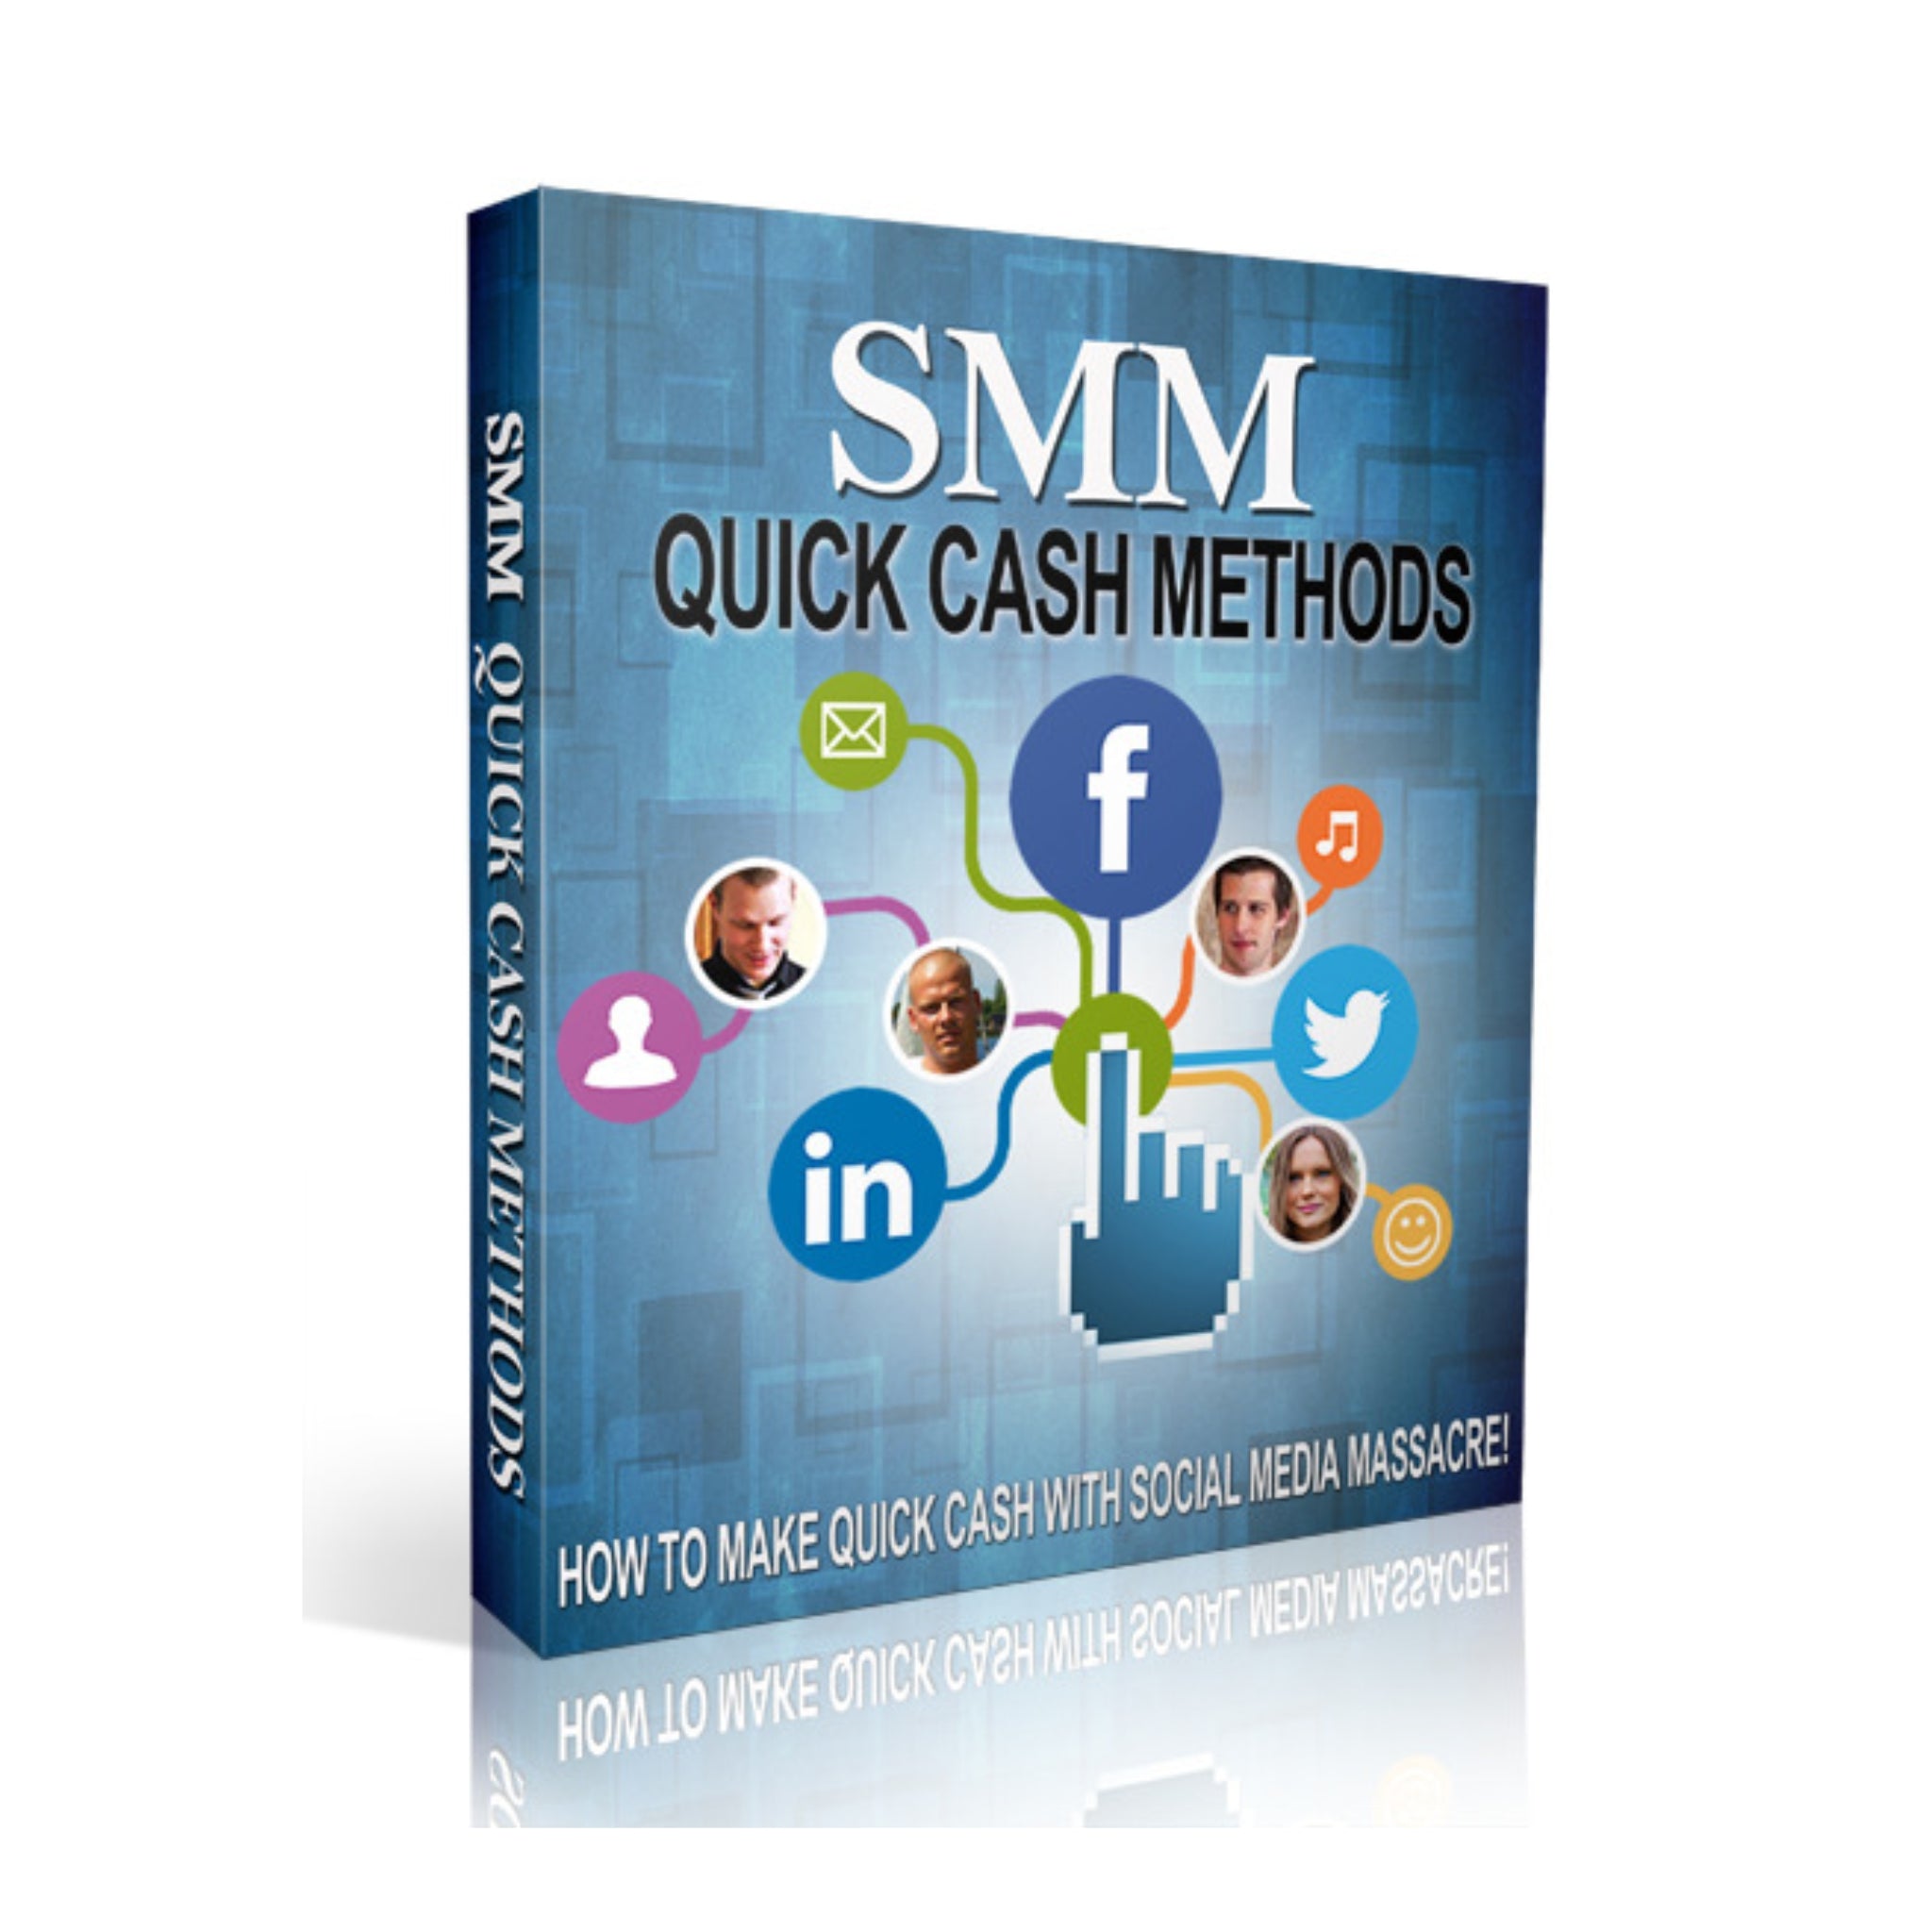 SMM Quick Cash Methods Video Guide